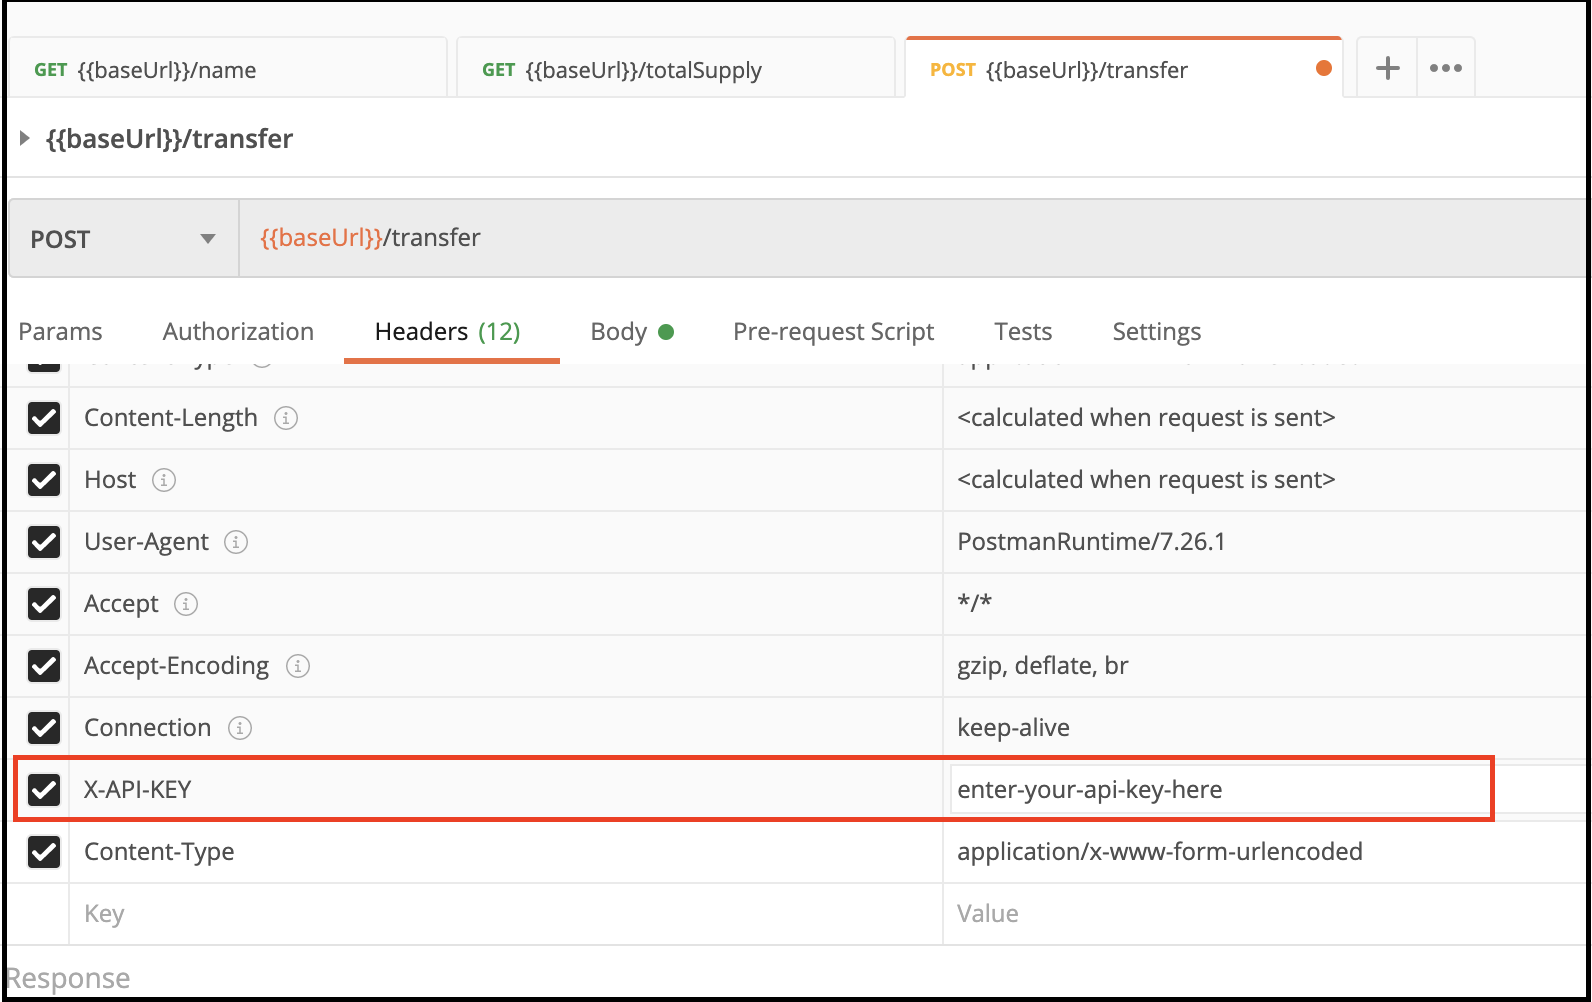 EthVigil HTTP POST call headers with API key for transfer() method